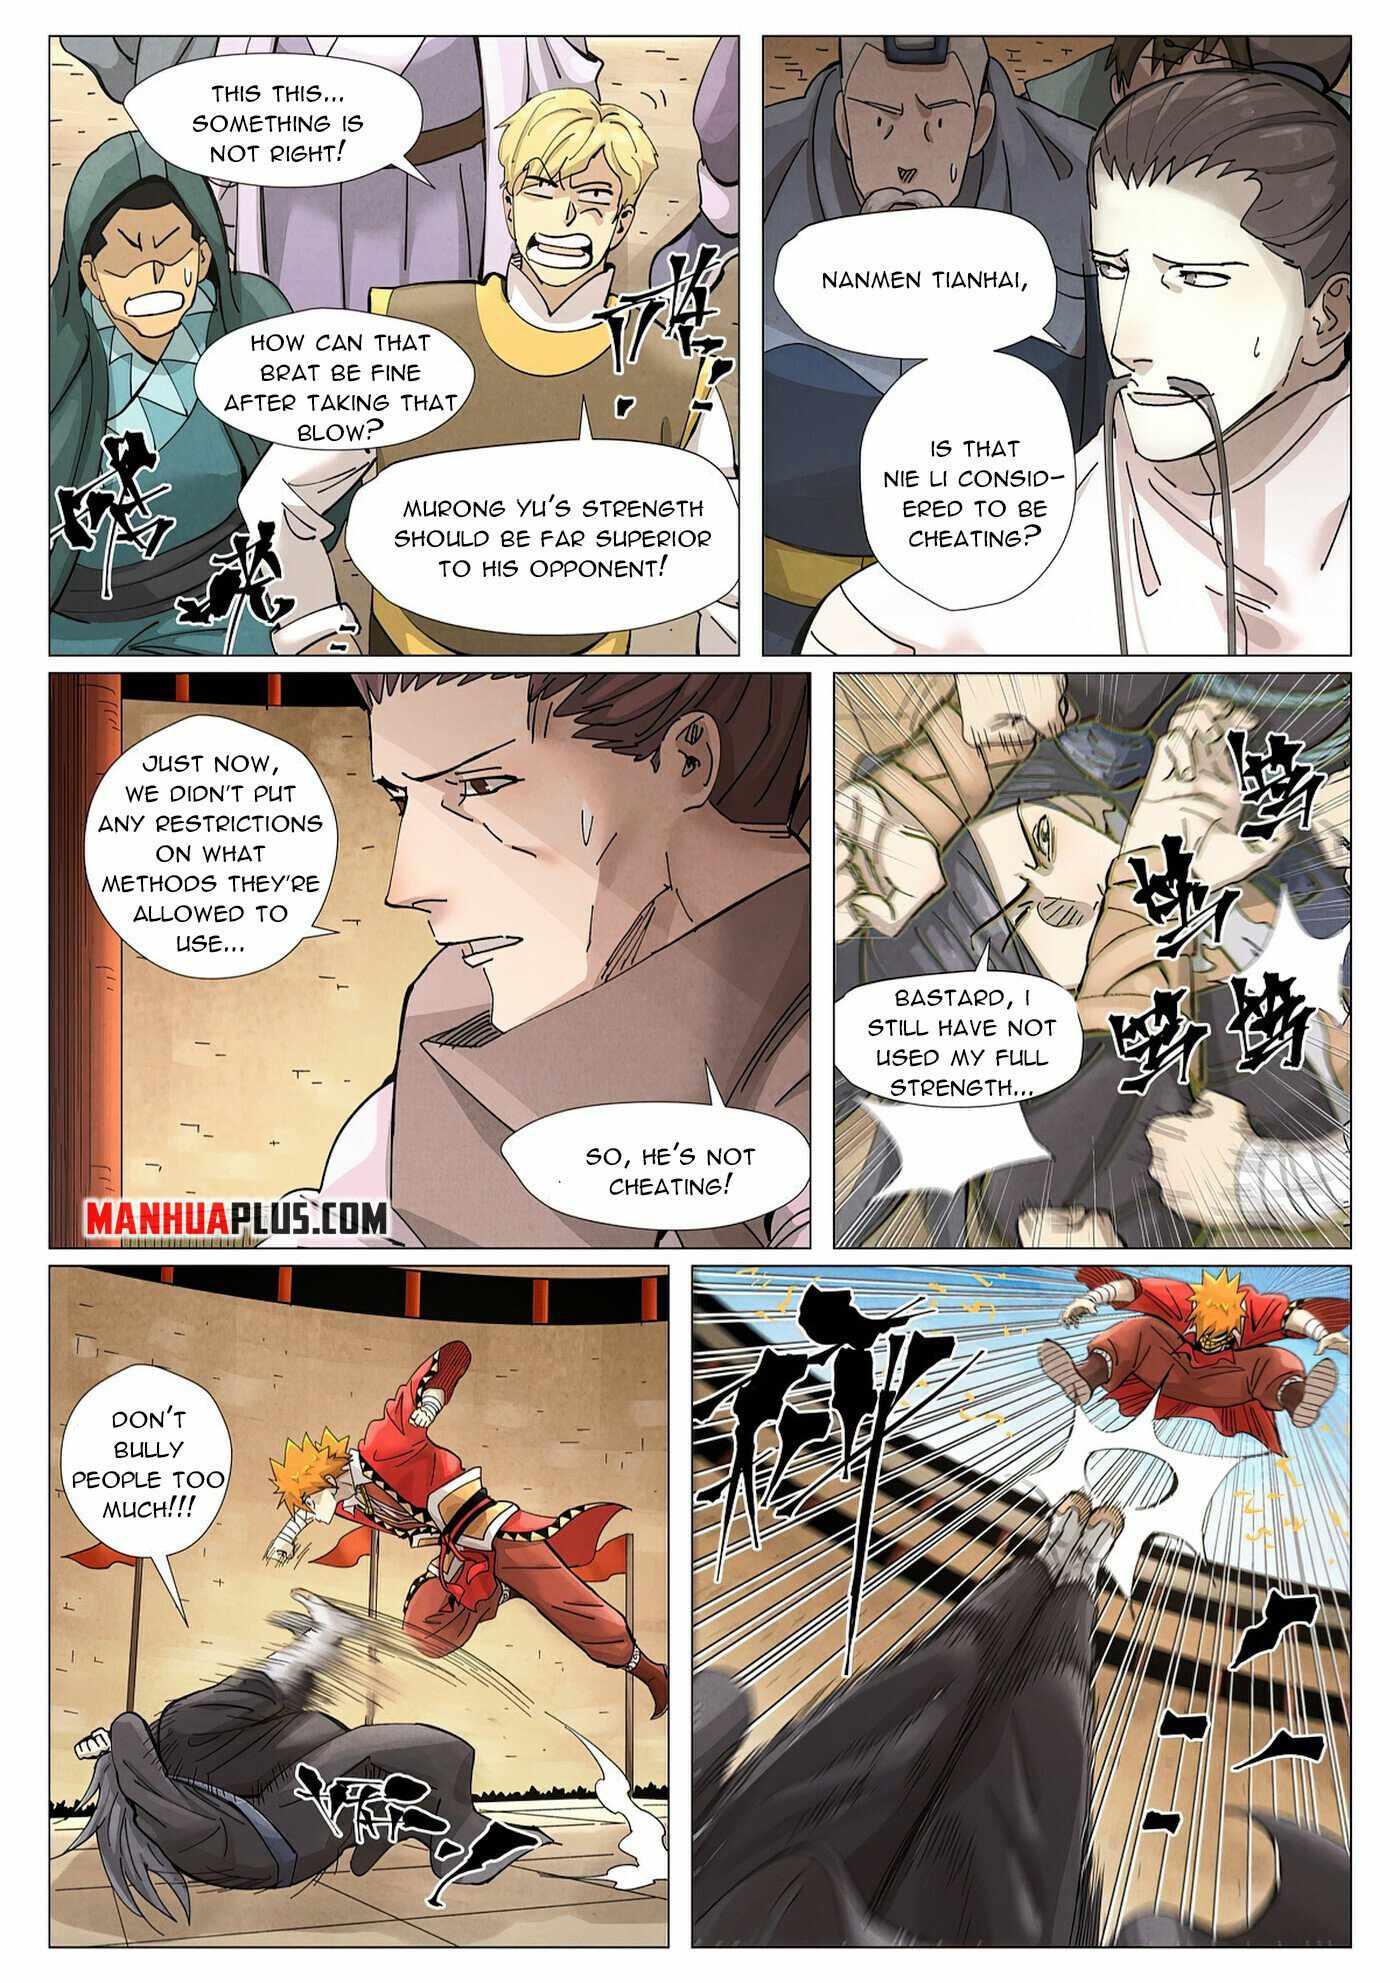 Tales Of Demons And Gods Chapter 396.5 page 4 - Mangakakalot